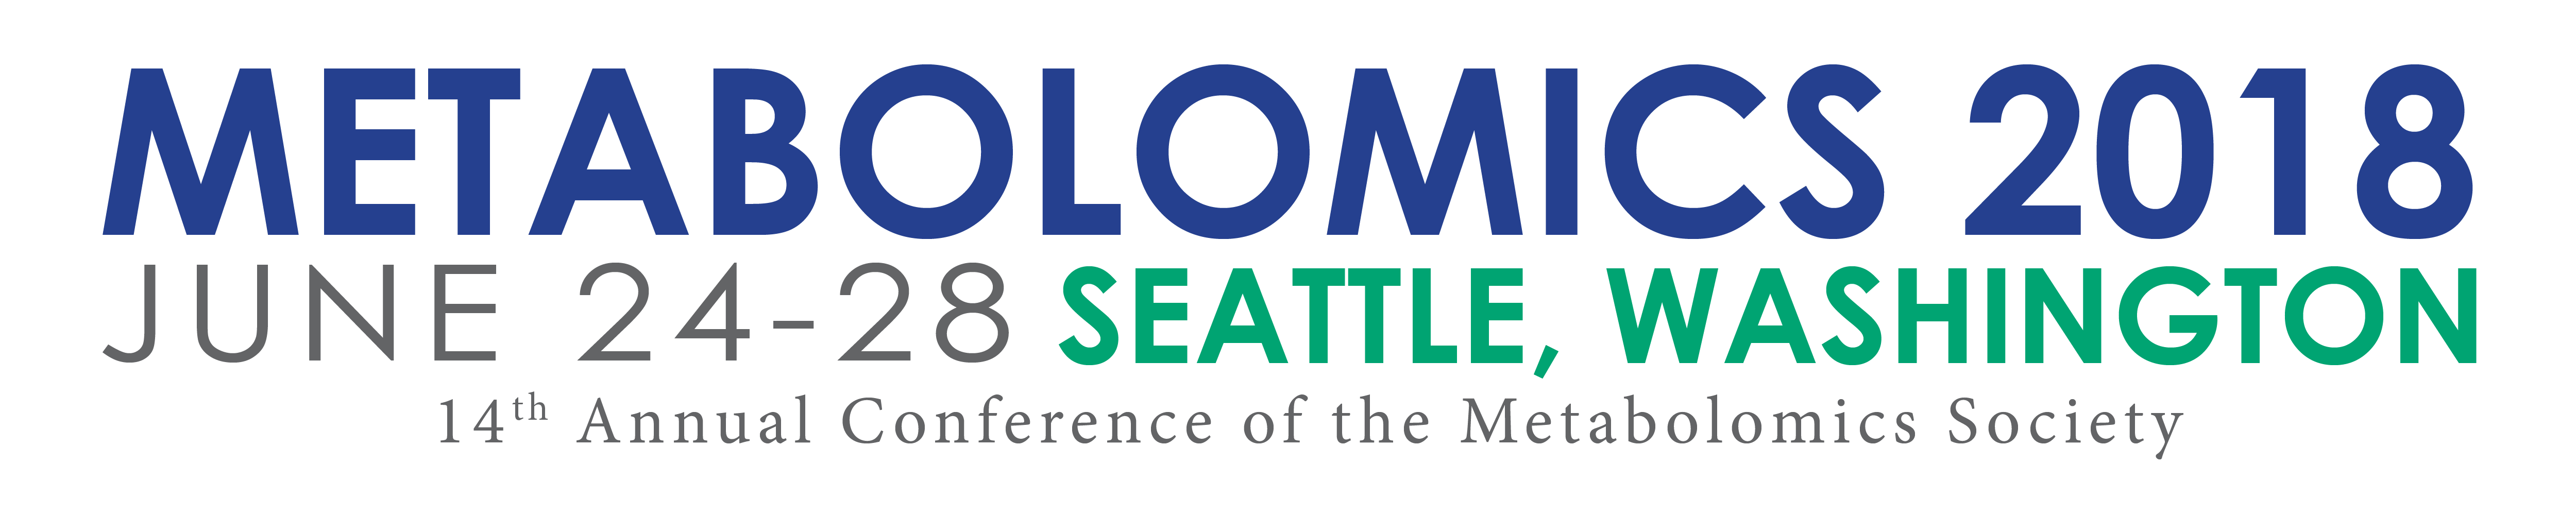 2018 Metabolomics Conference